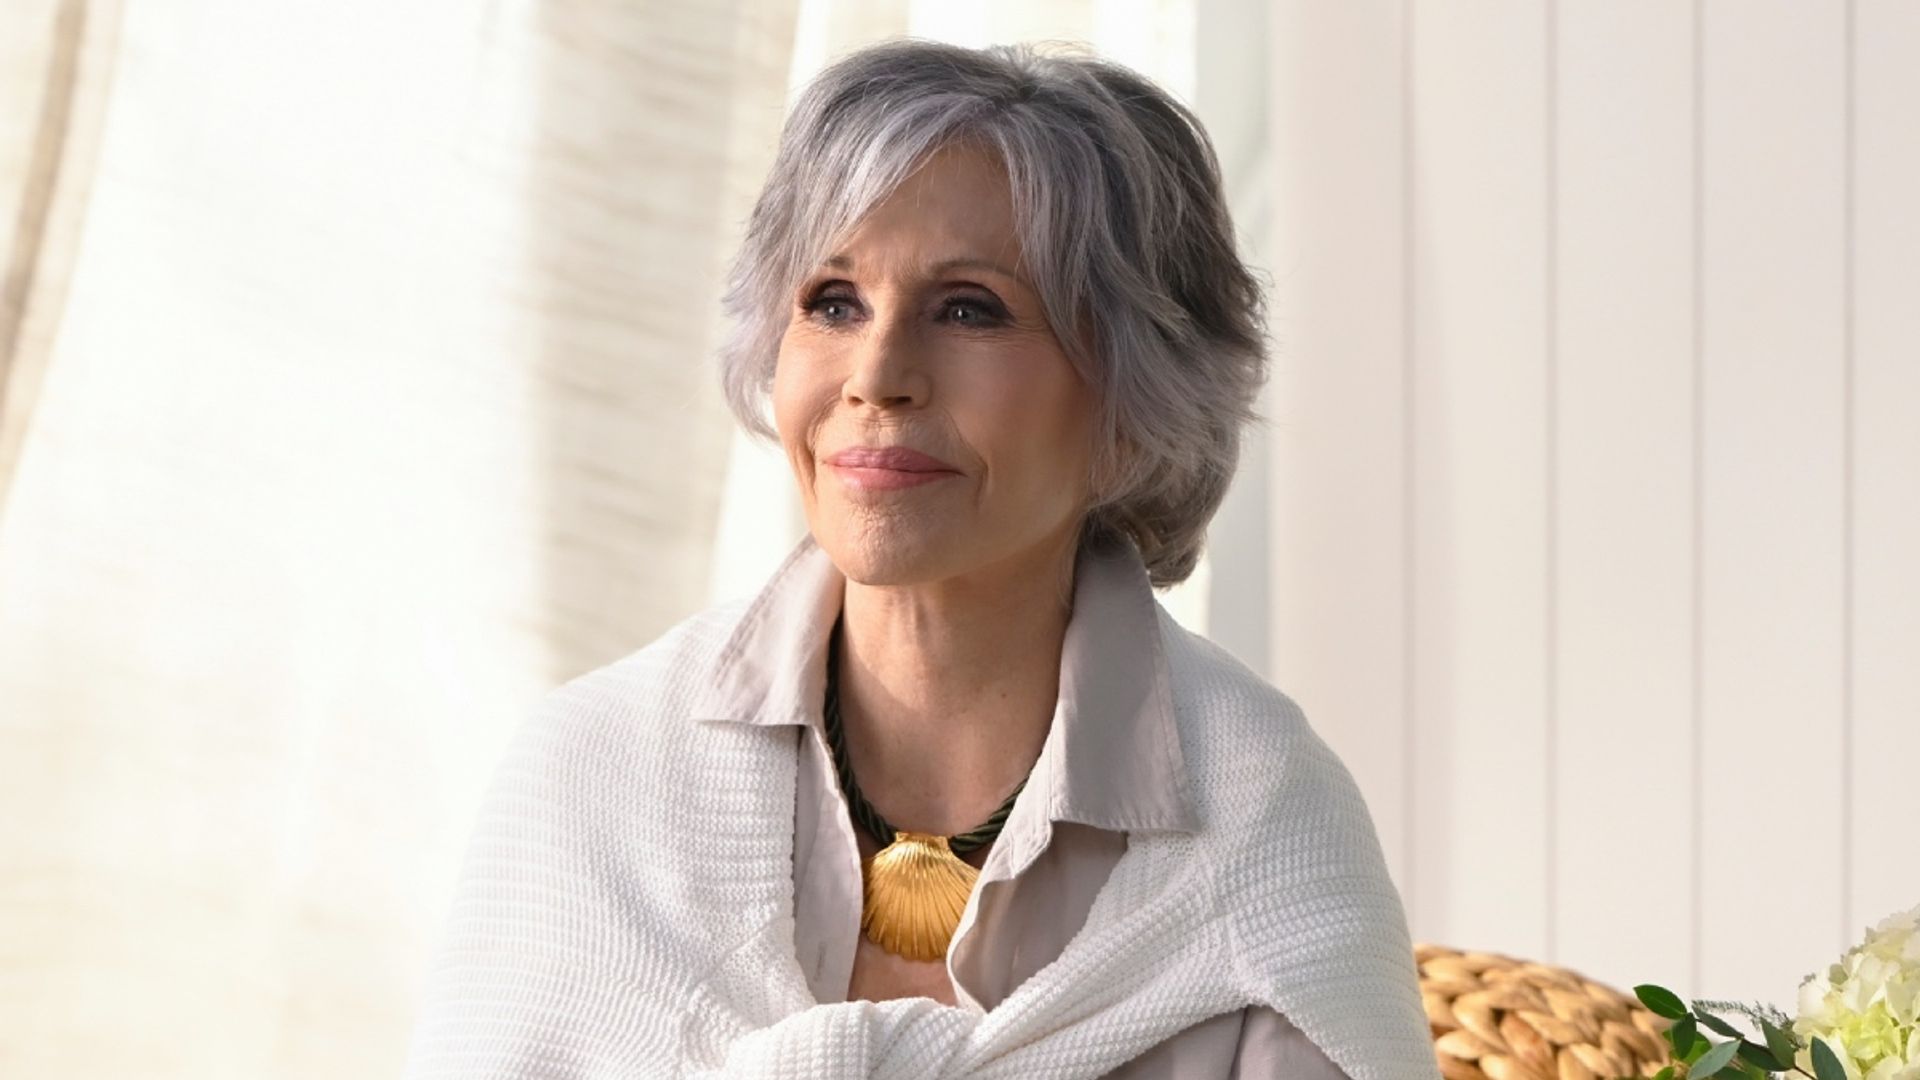 Jane Fonda shares major update on battle with cancer